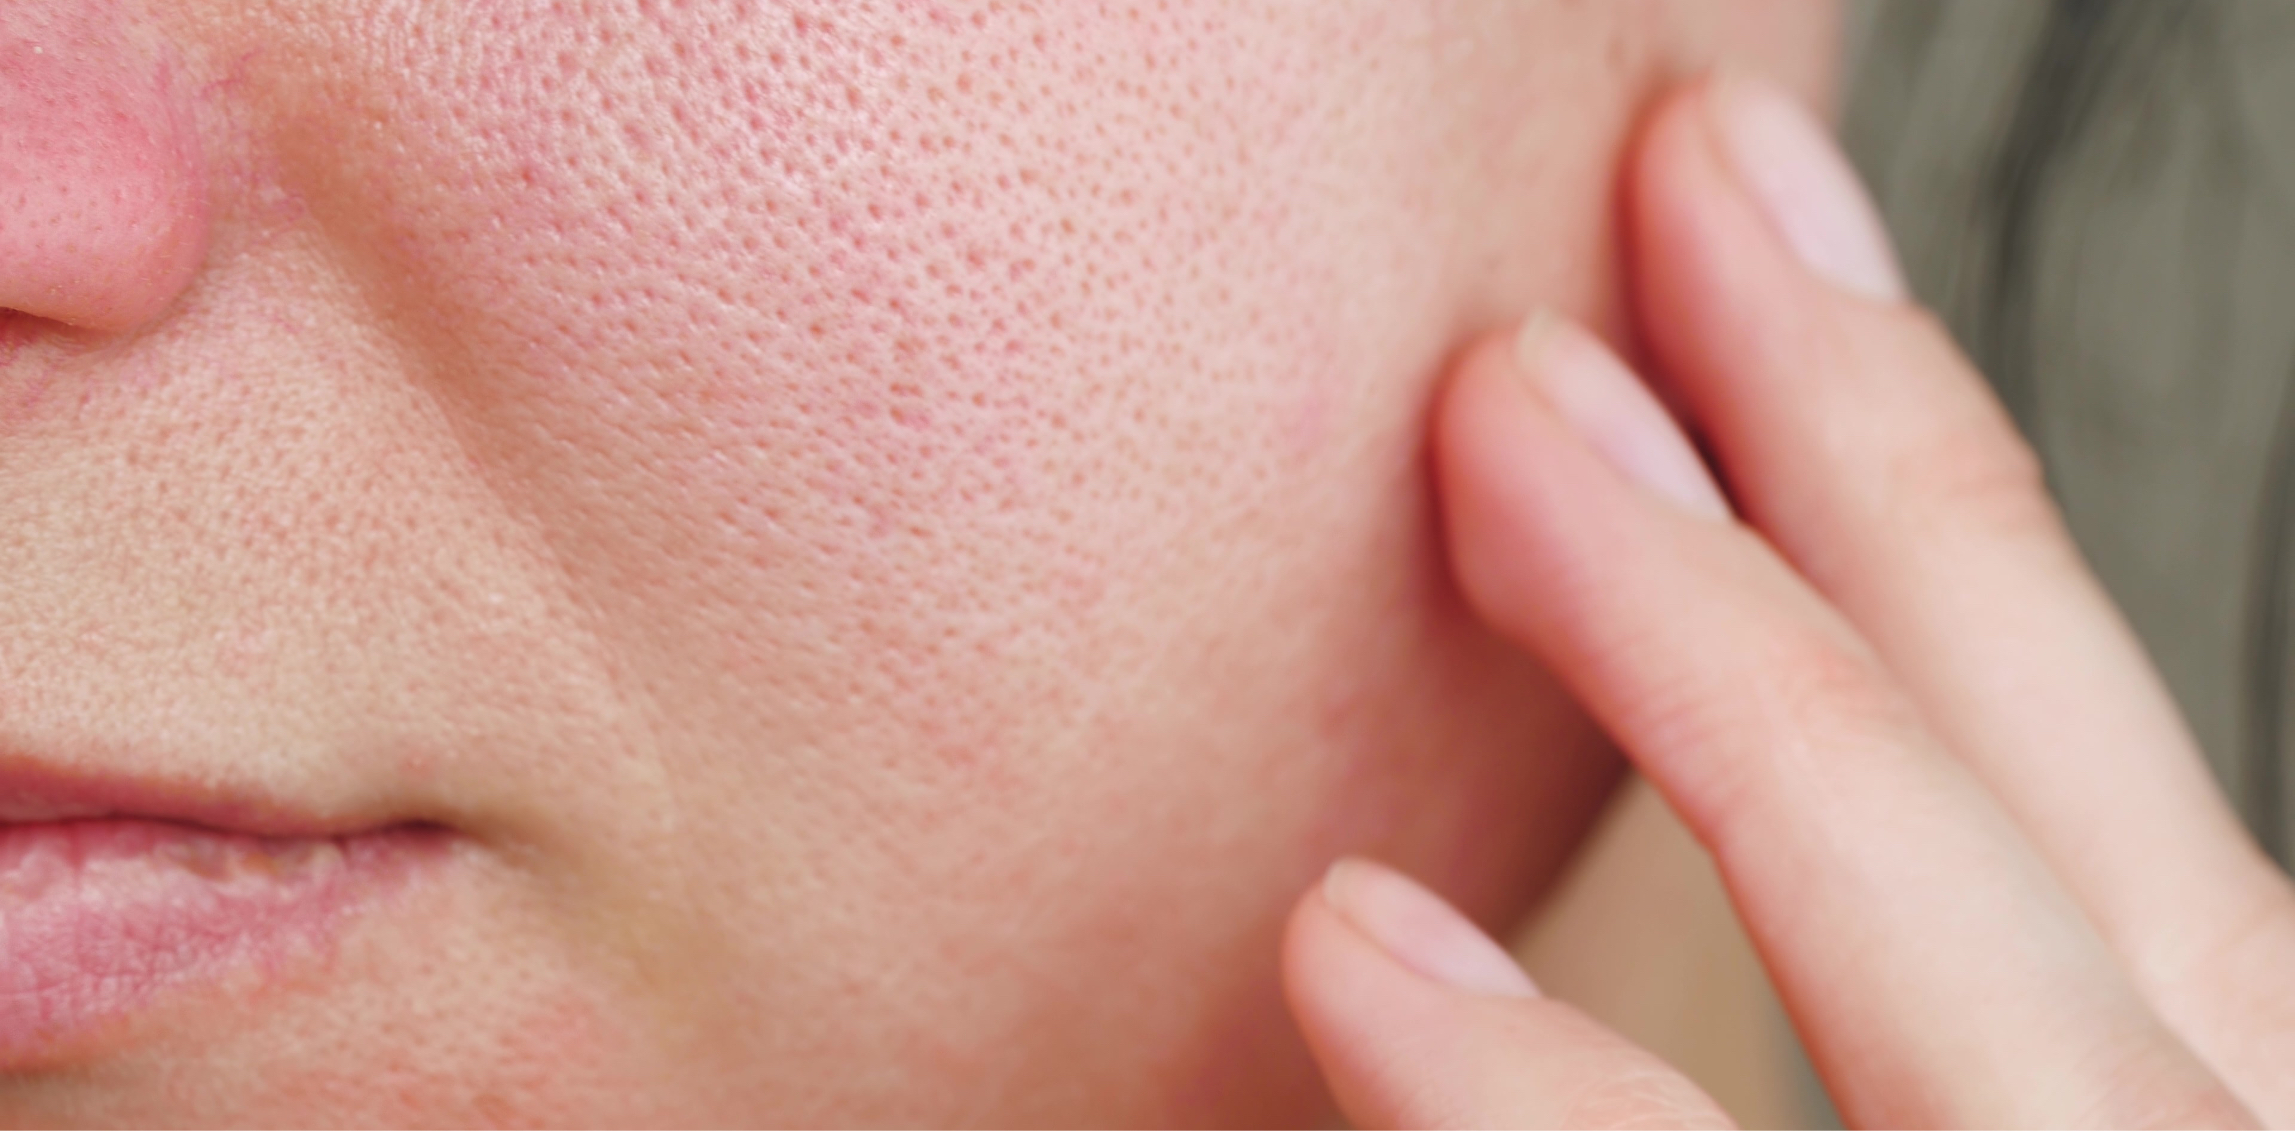 How to treat open pores